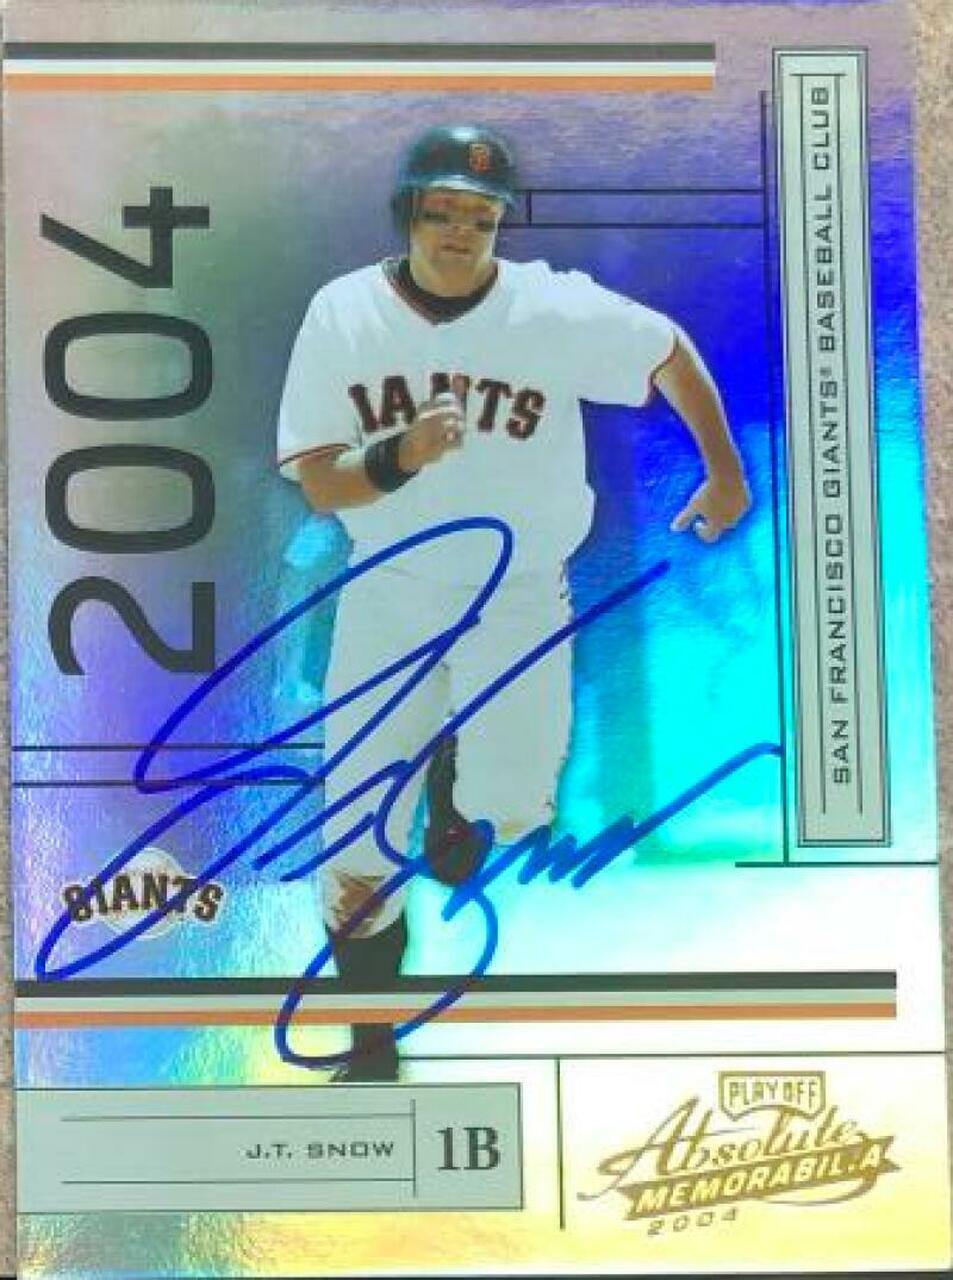 JR Phillips Signed 2004 Playoff Absolute Memorabilia Baseball Card - San Francisco Giants - PastPros